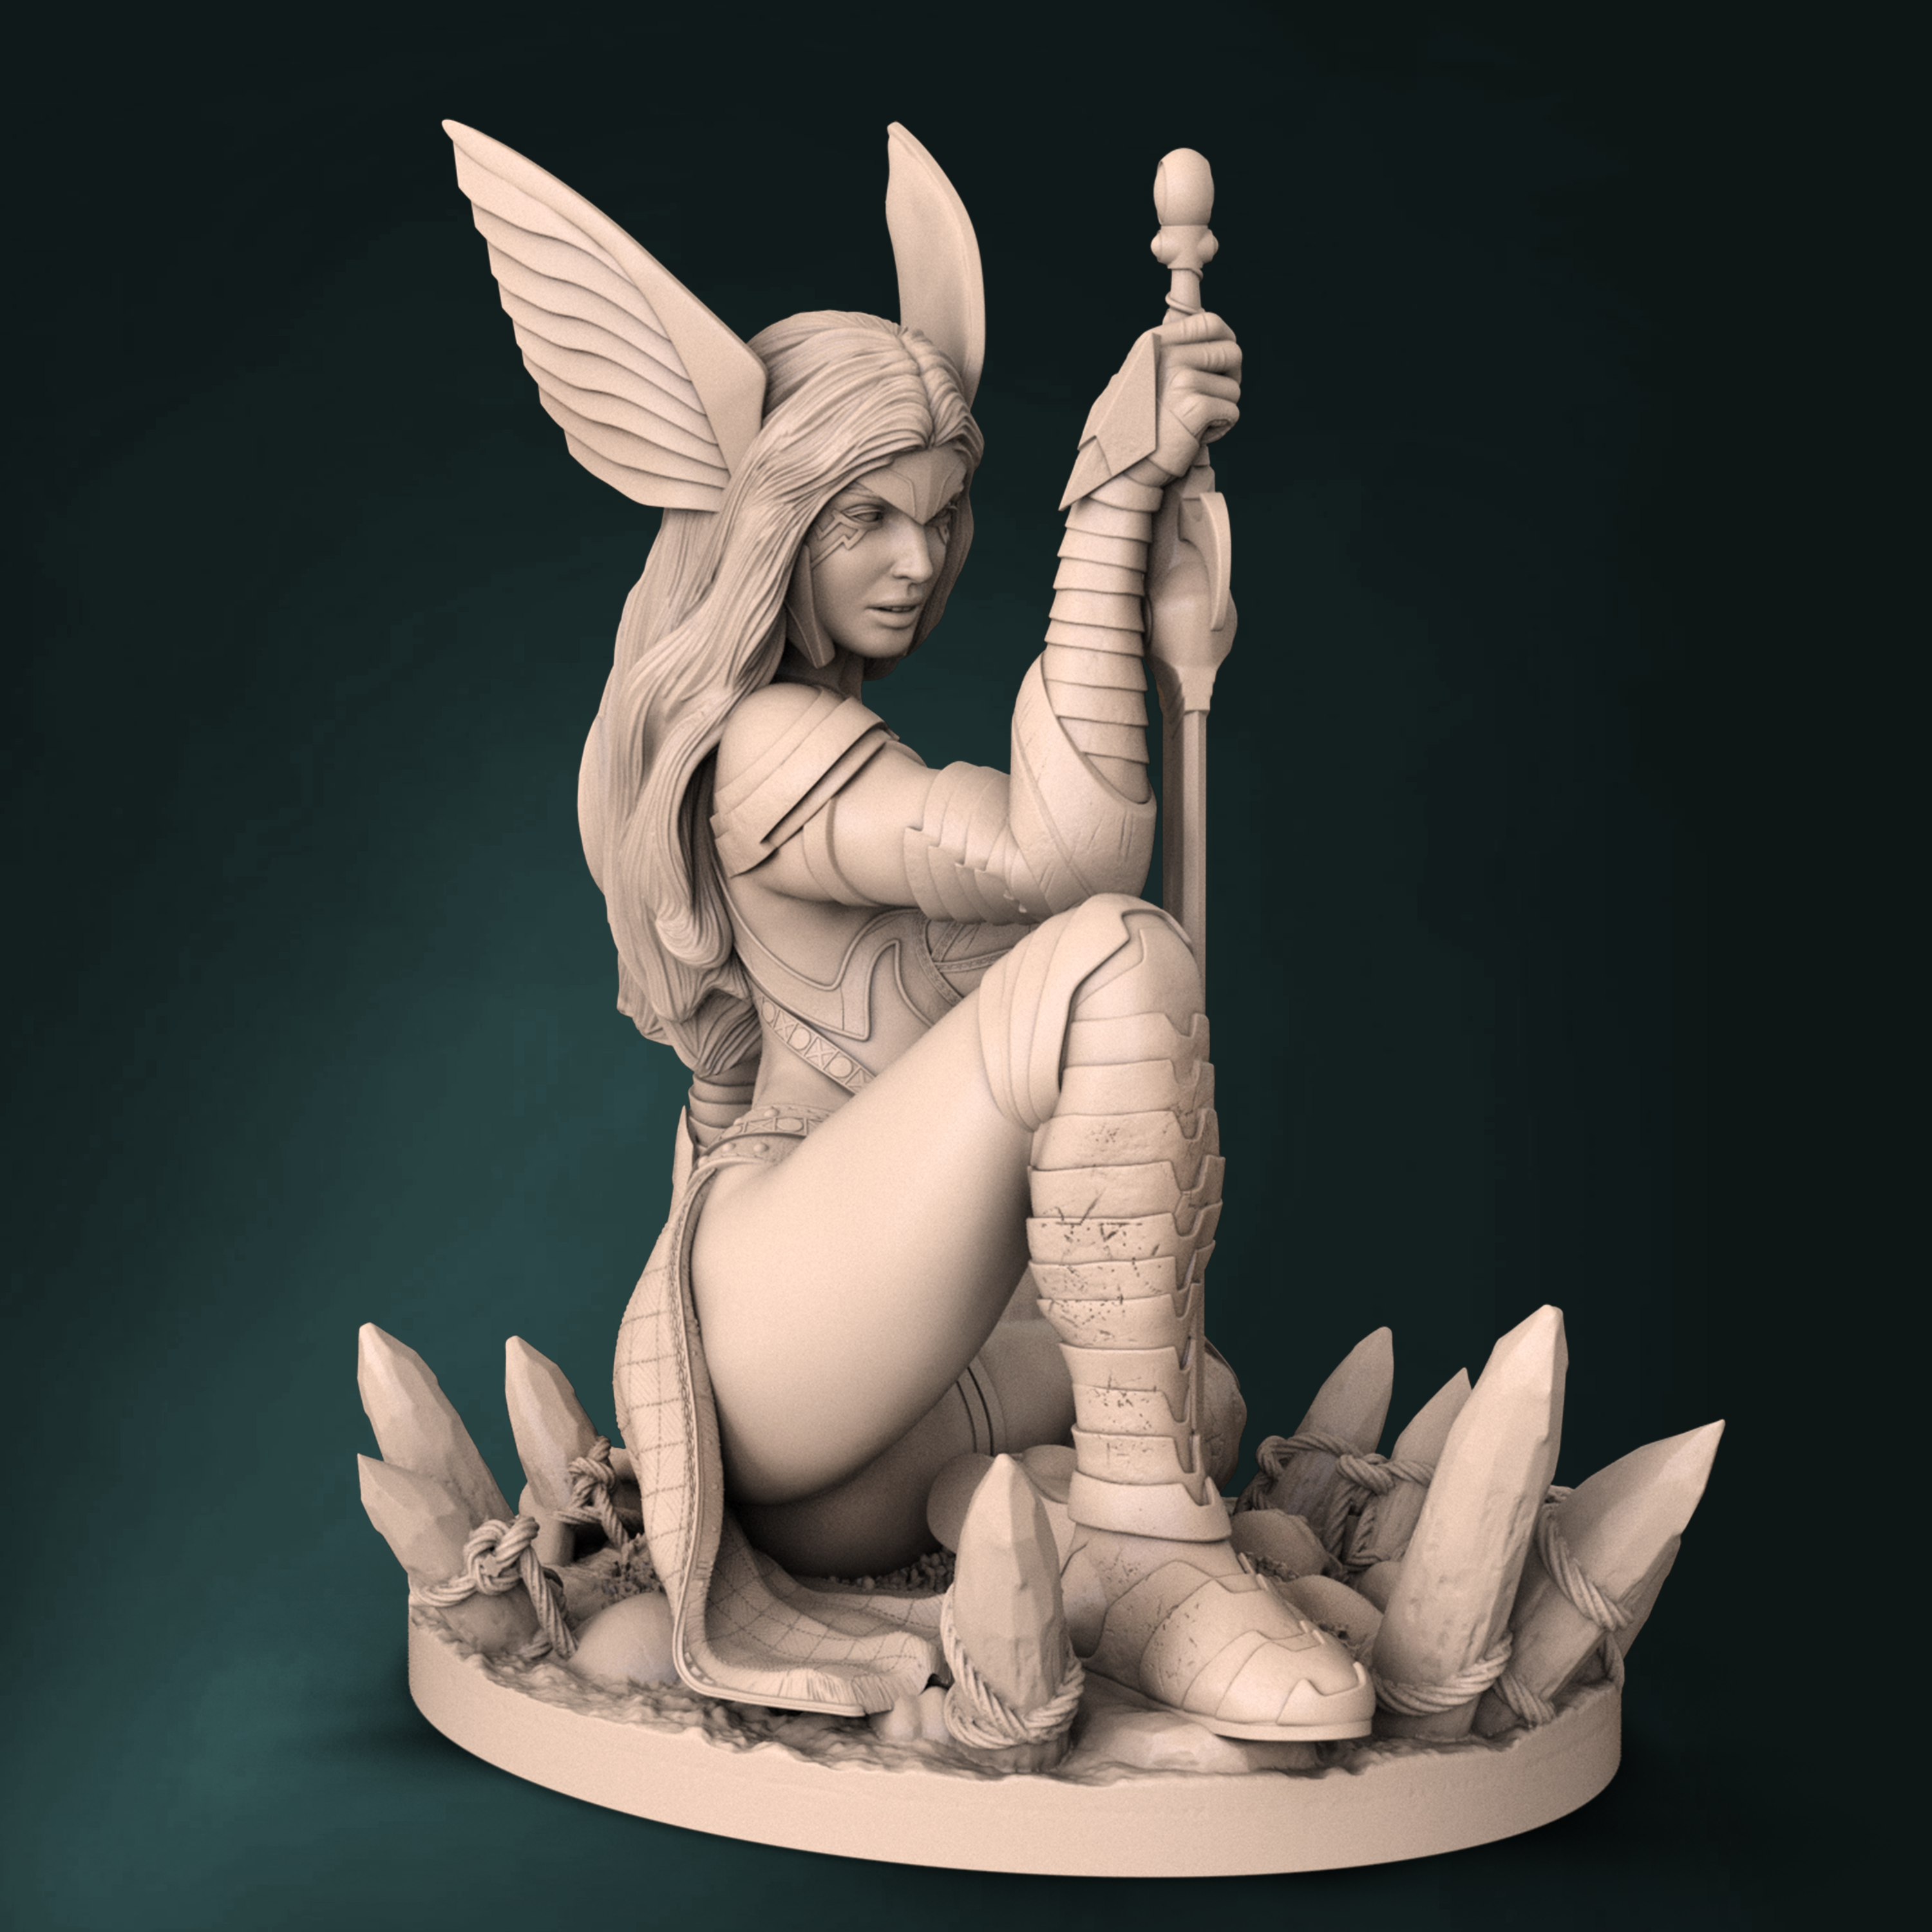 Angela 3D Printed model - Fan Art, SFW/NSFW 75mm or 180mm